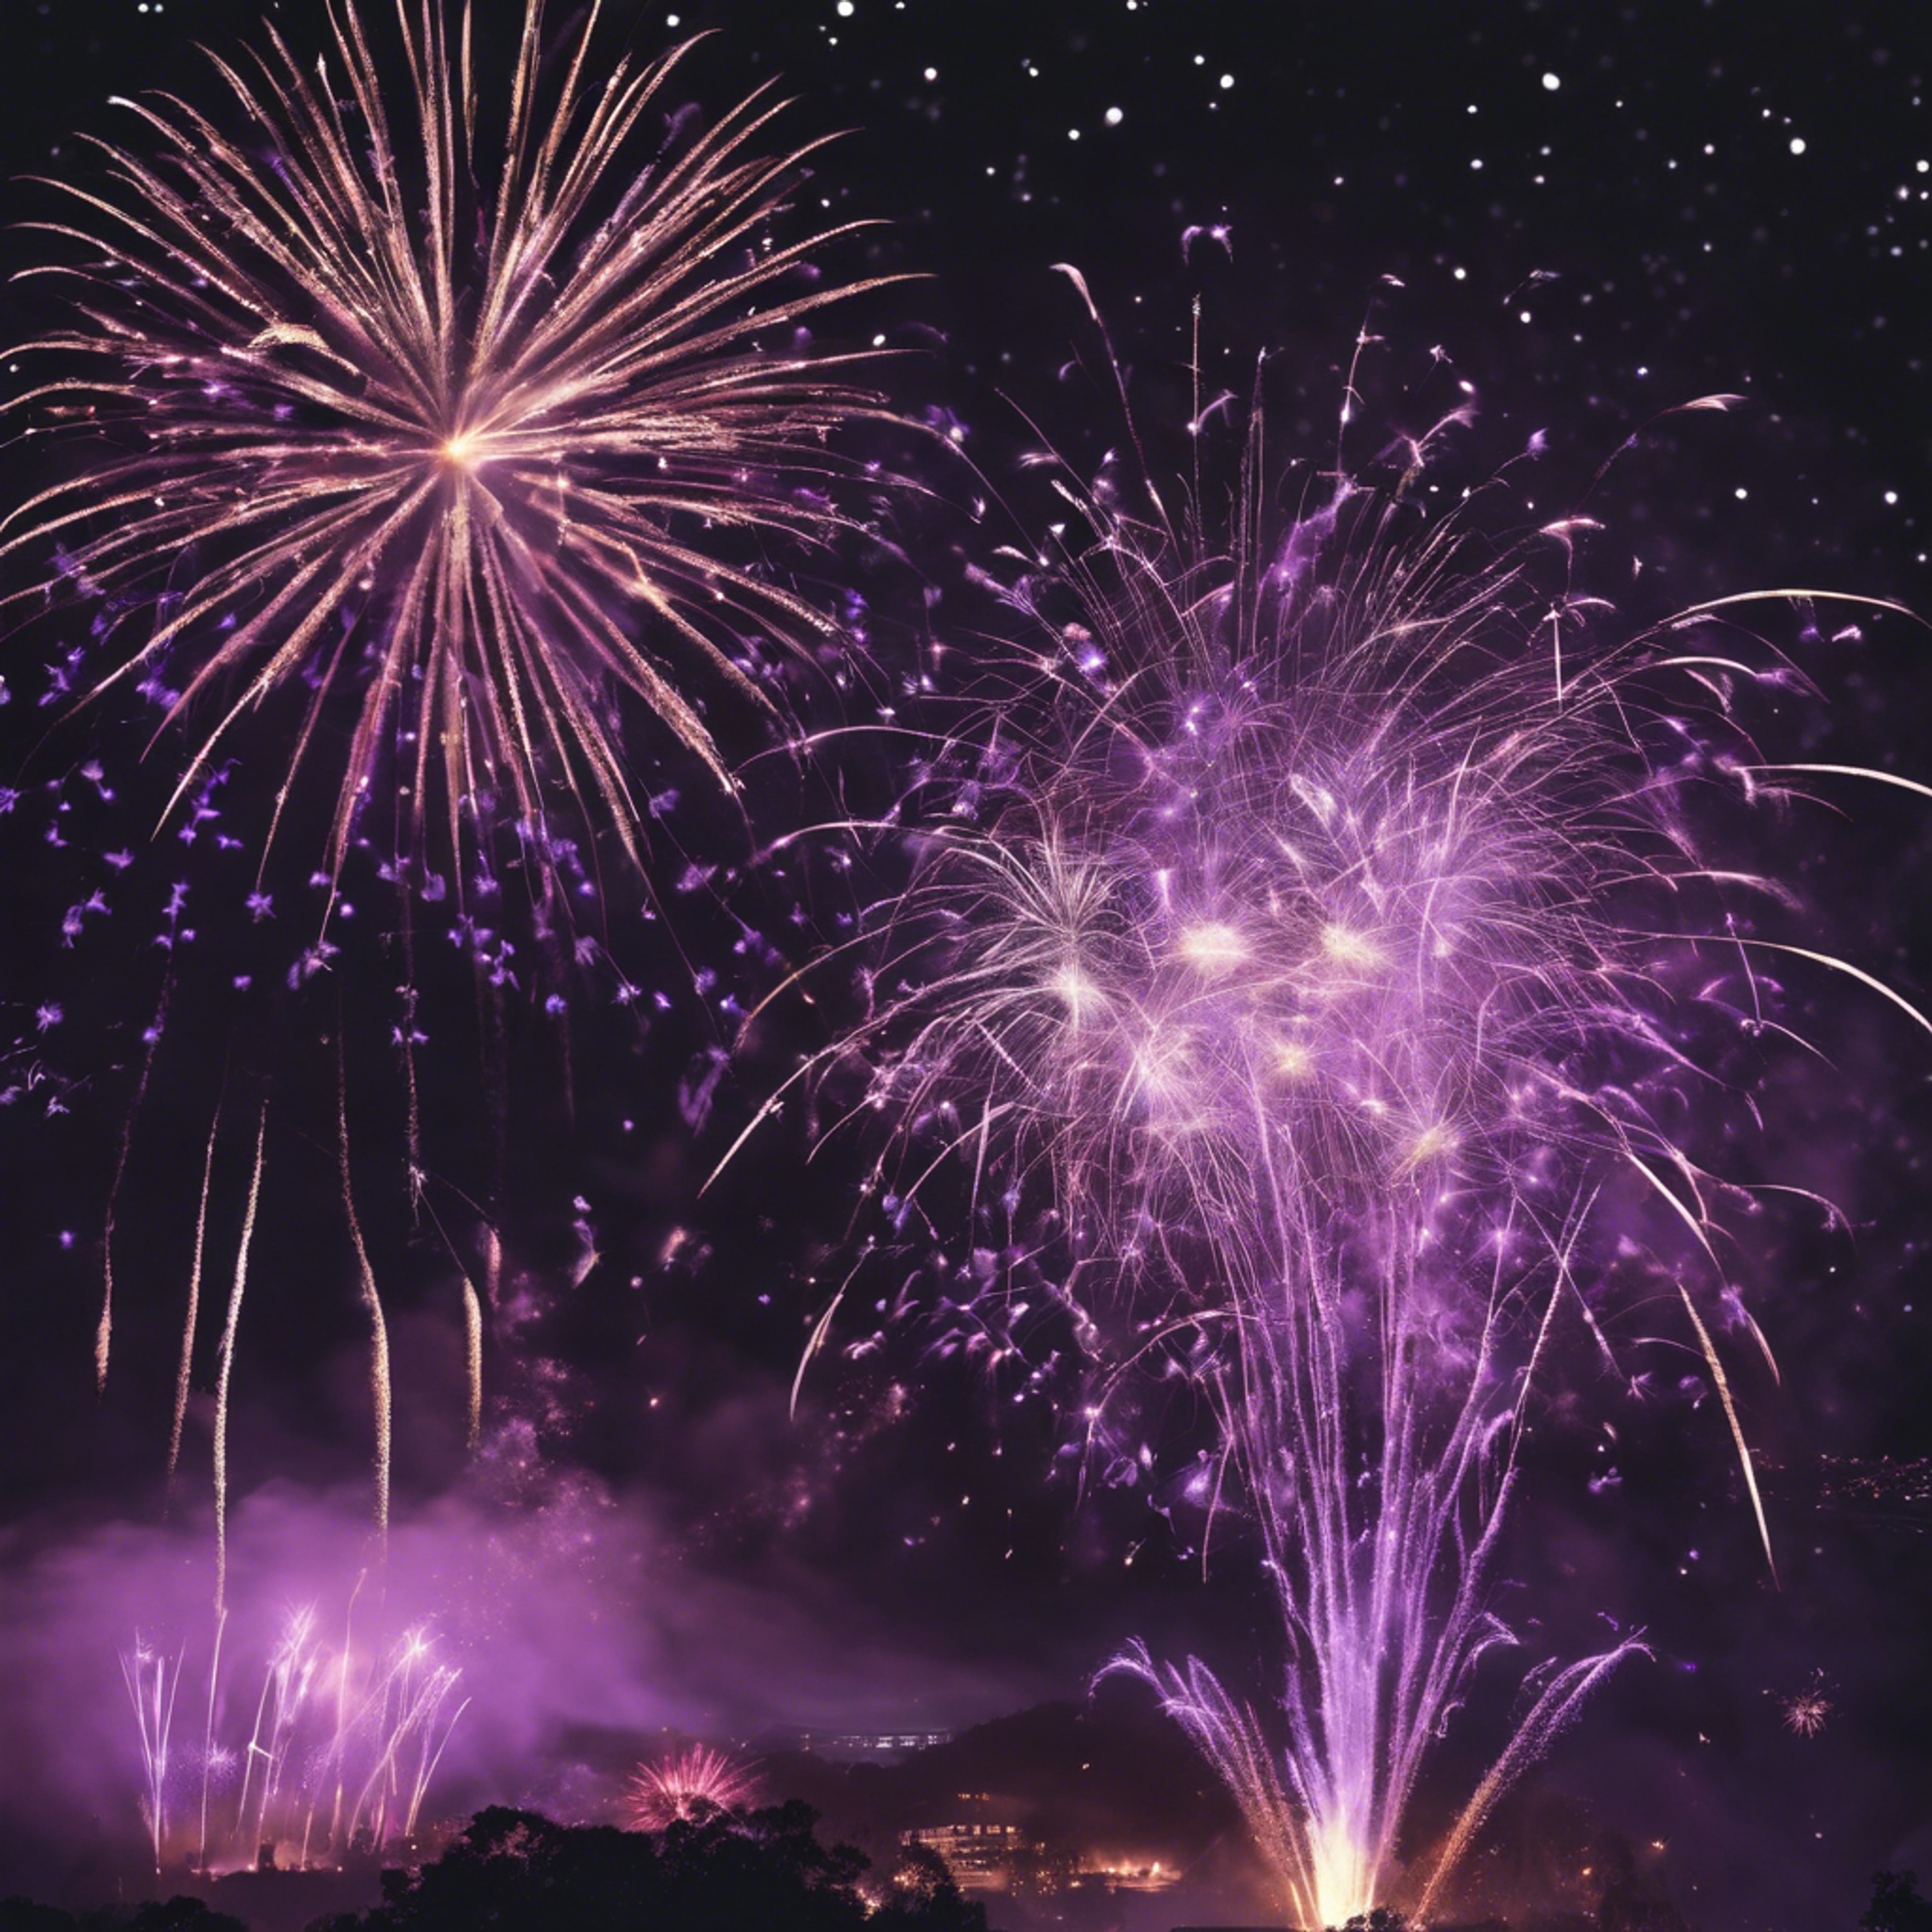 Black and purple fireworks lighting up the night sky during a grand celebration. Hintergrund[a63540e6fc8e4a549ec0]